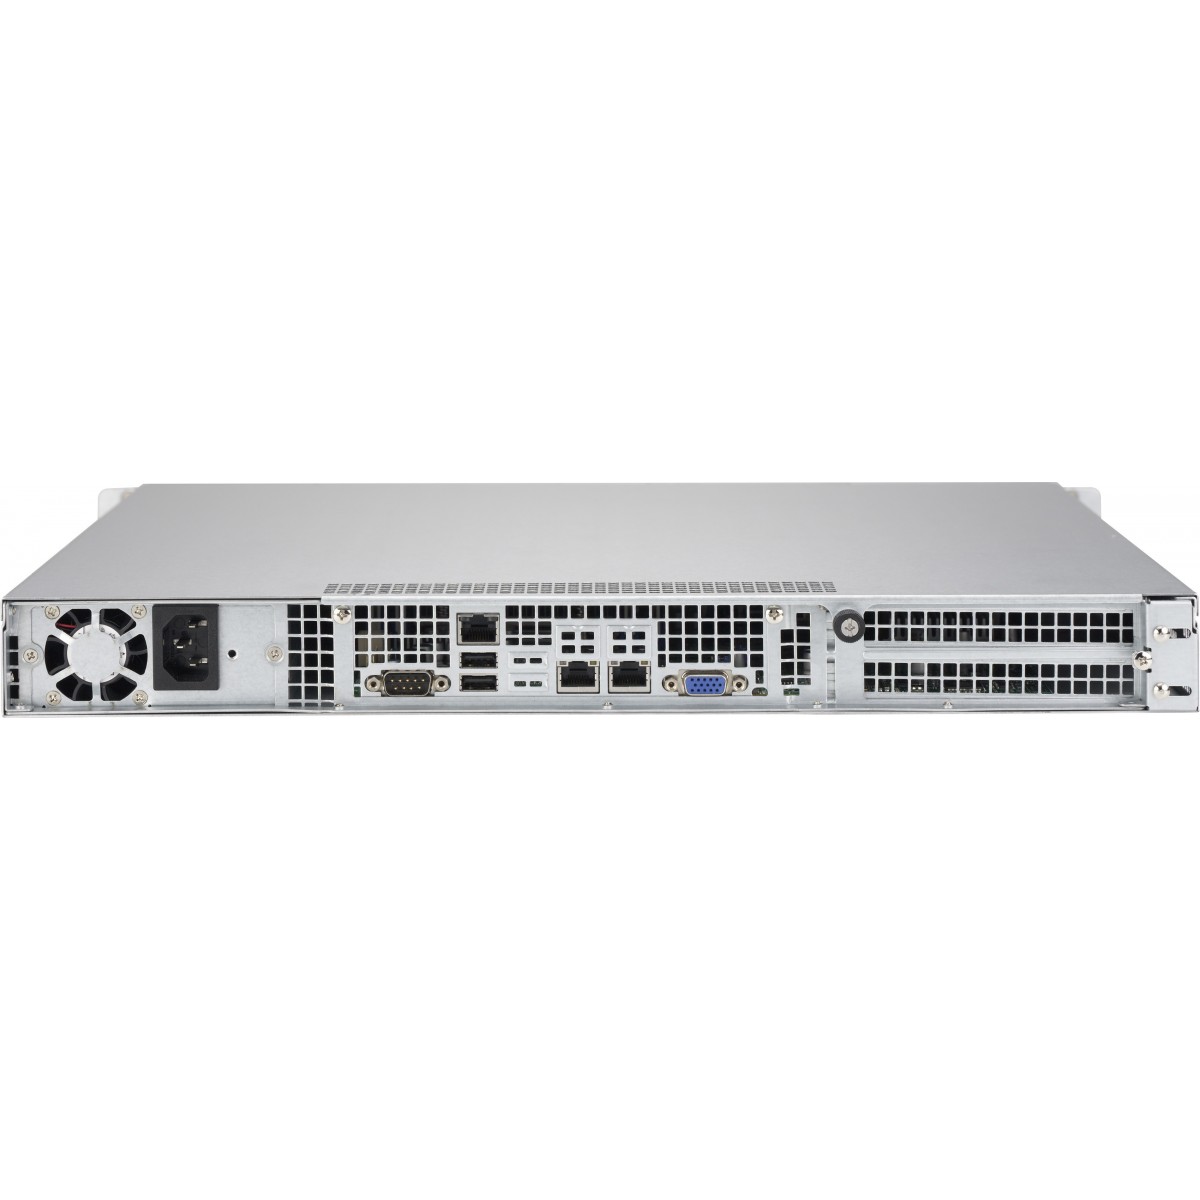 Supermicro 514-505 - Rack - Server - White - EATX - 1U - Home/Office